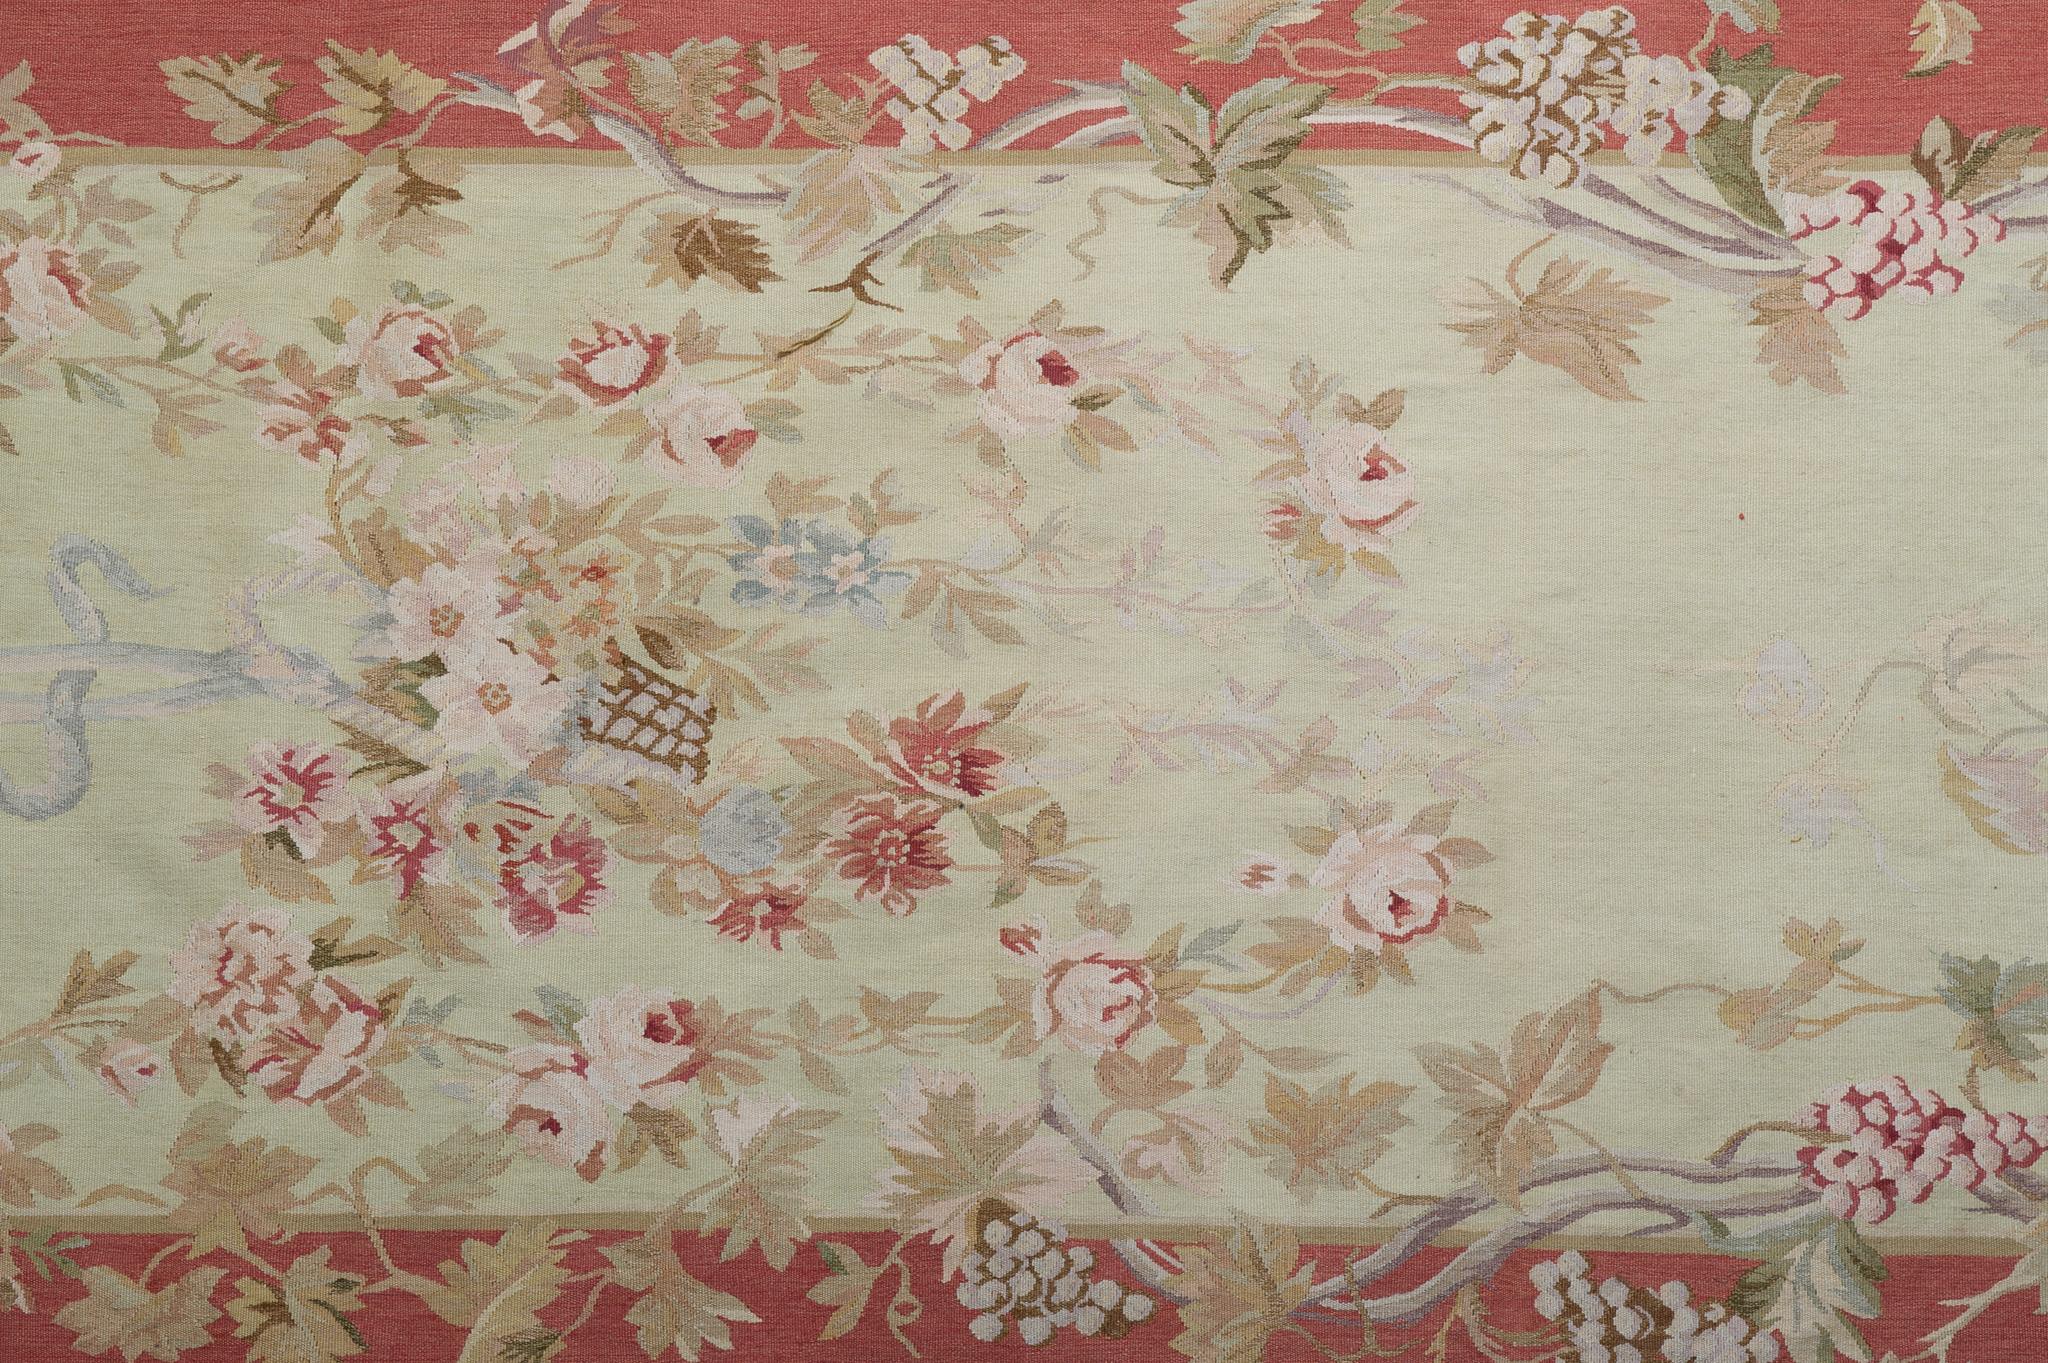 Aubusson Tapestry or Runner For Sale 2